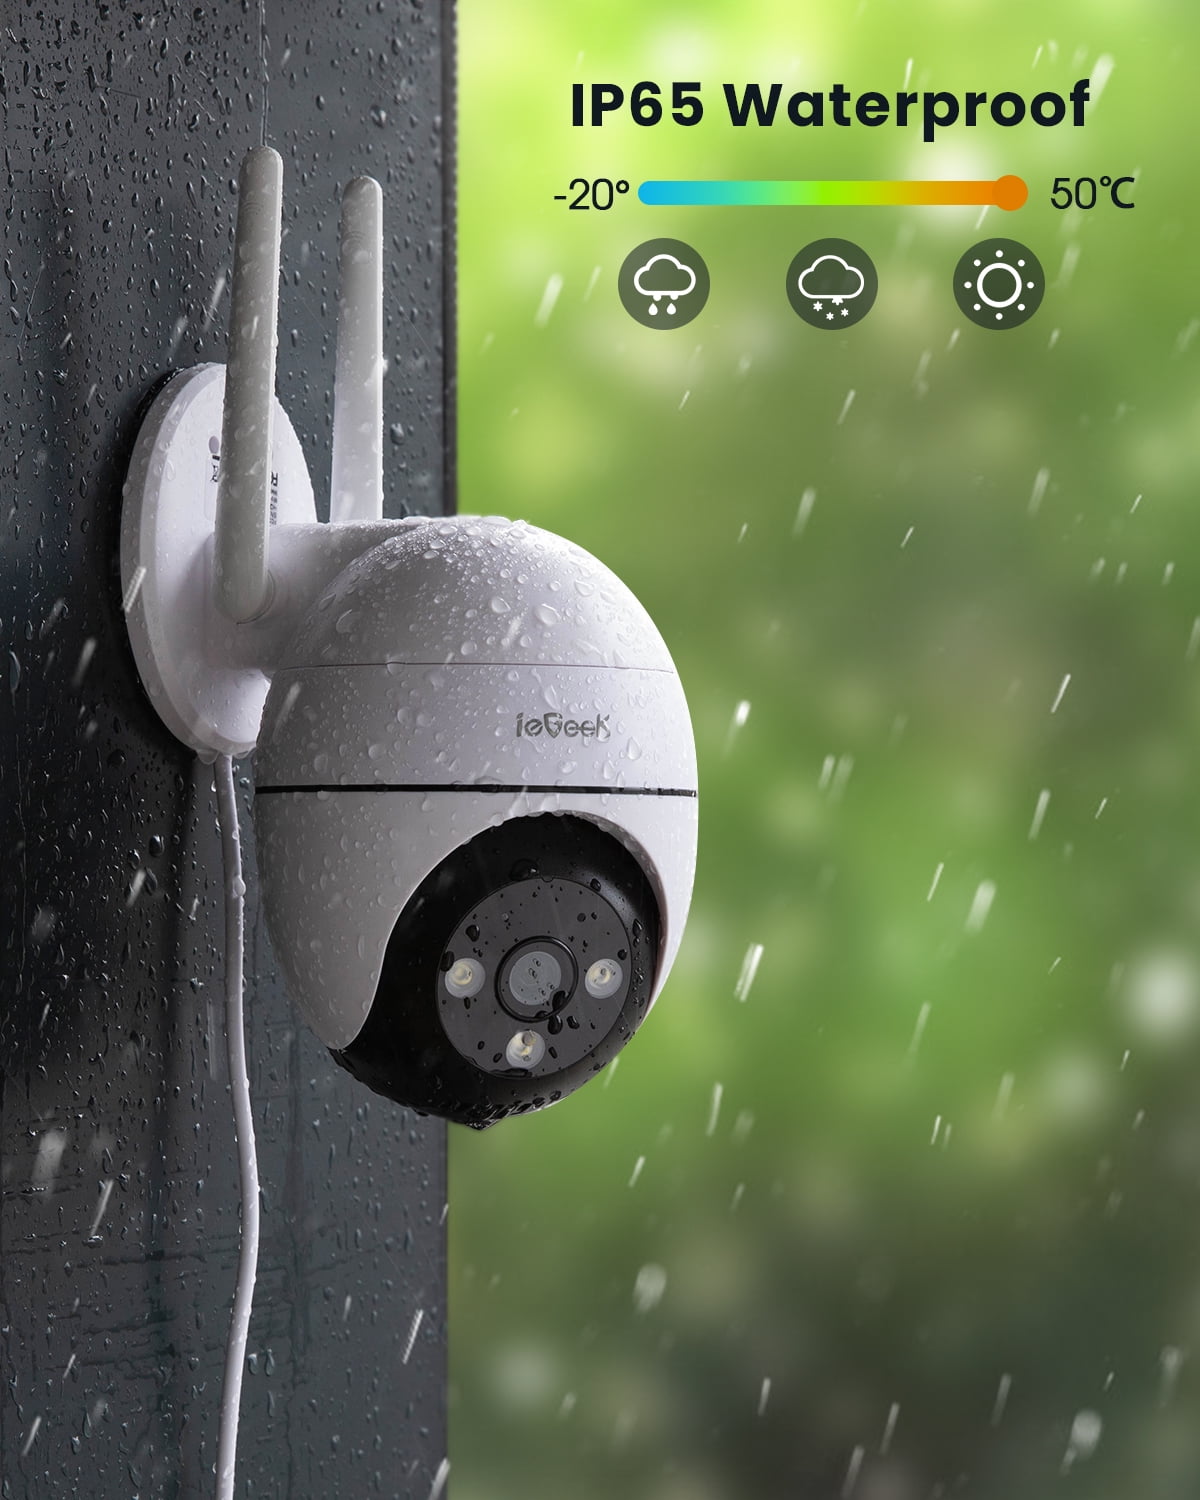 ieGeek Security Camera Wireless WiFi, 360°PTZ 2K/3MP Outdoor Surveillance  Camera, Color Night Vision, Spotlight & Siren, Work with Alexa 